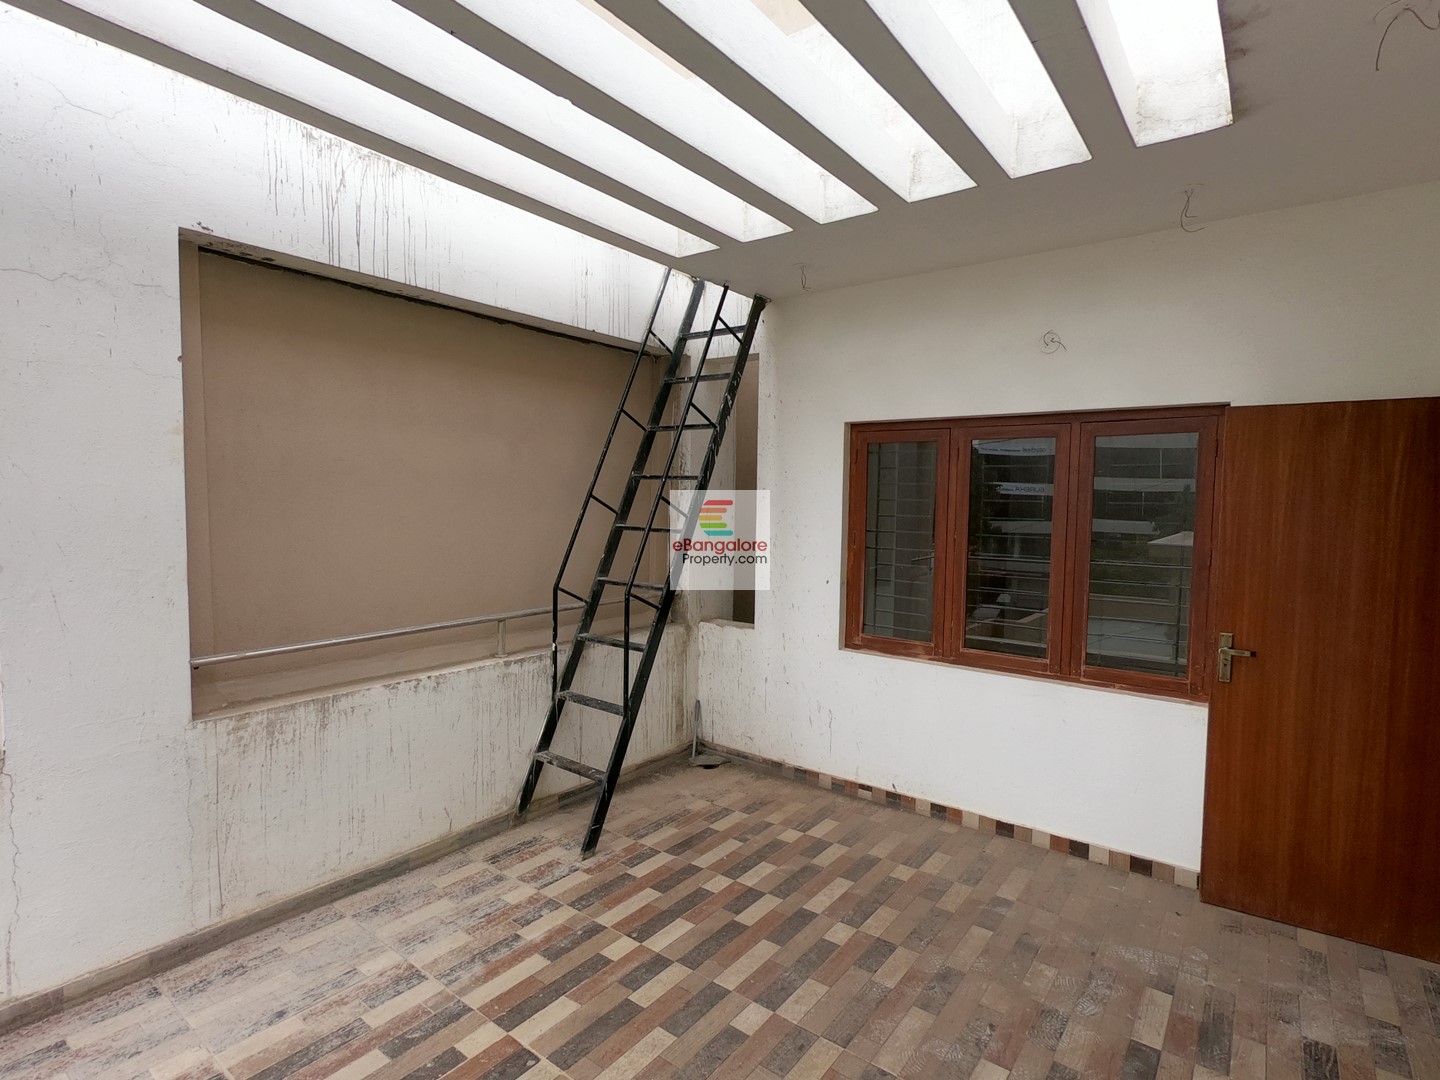 Kasturi Nagar BDA – 4BHK New Independent House for Sale in 20×30 – Posh Locality